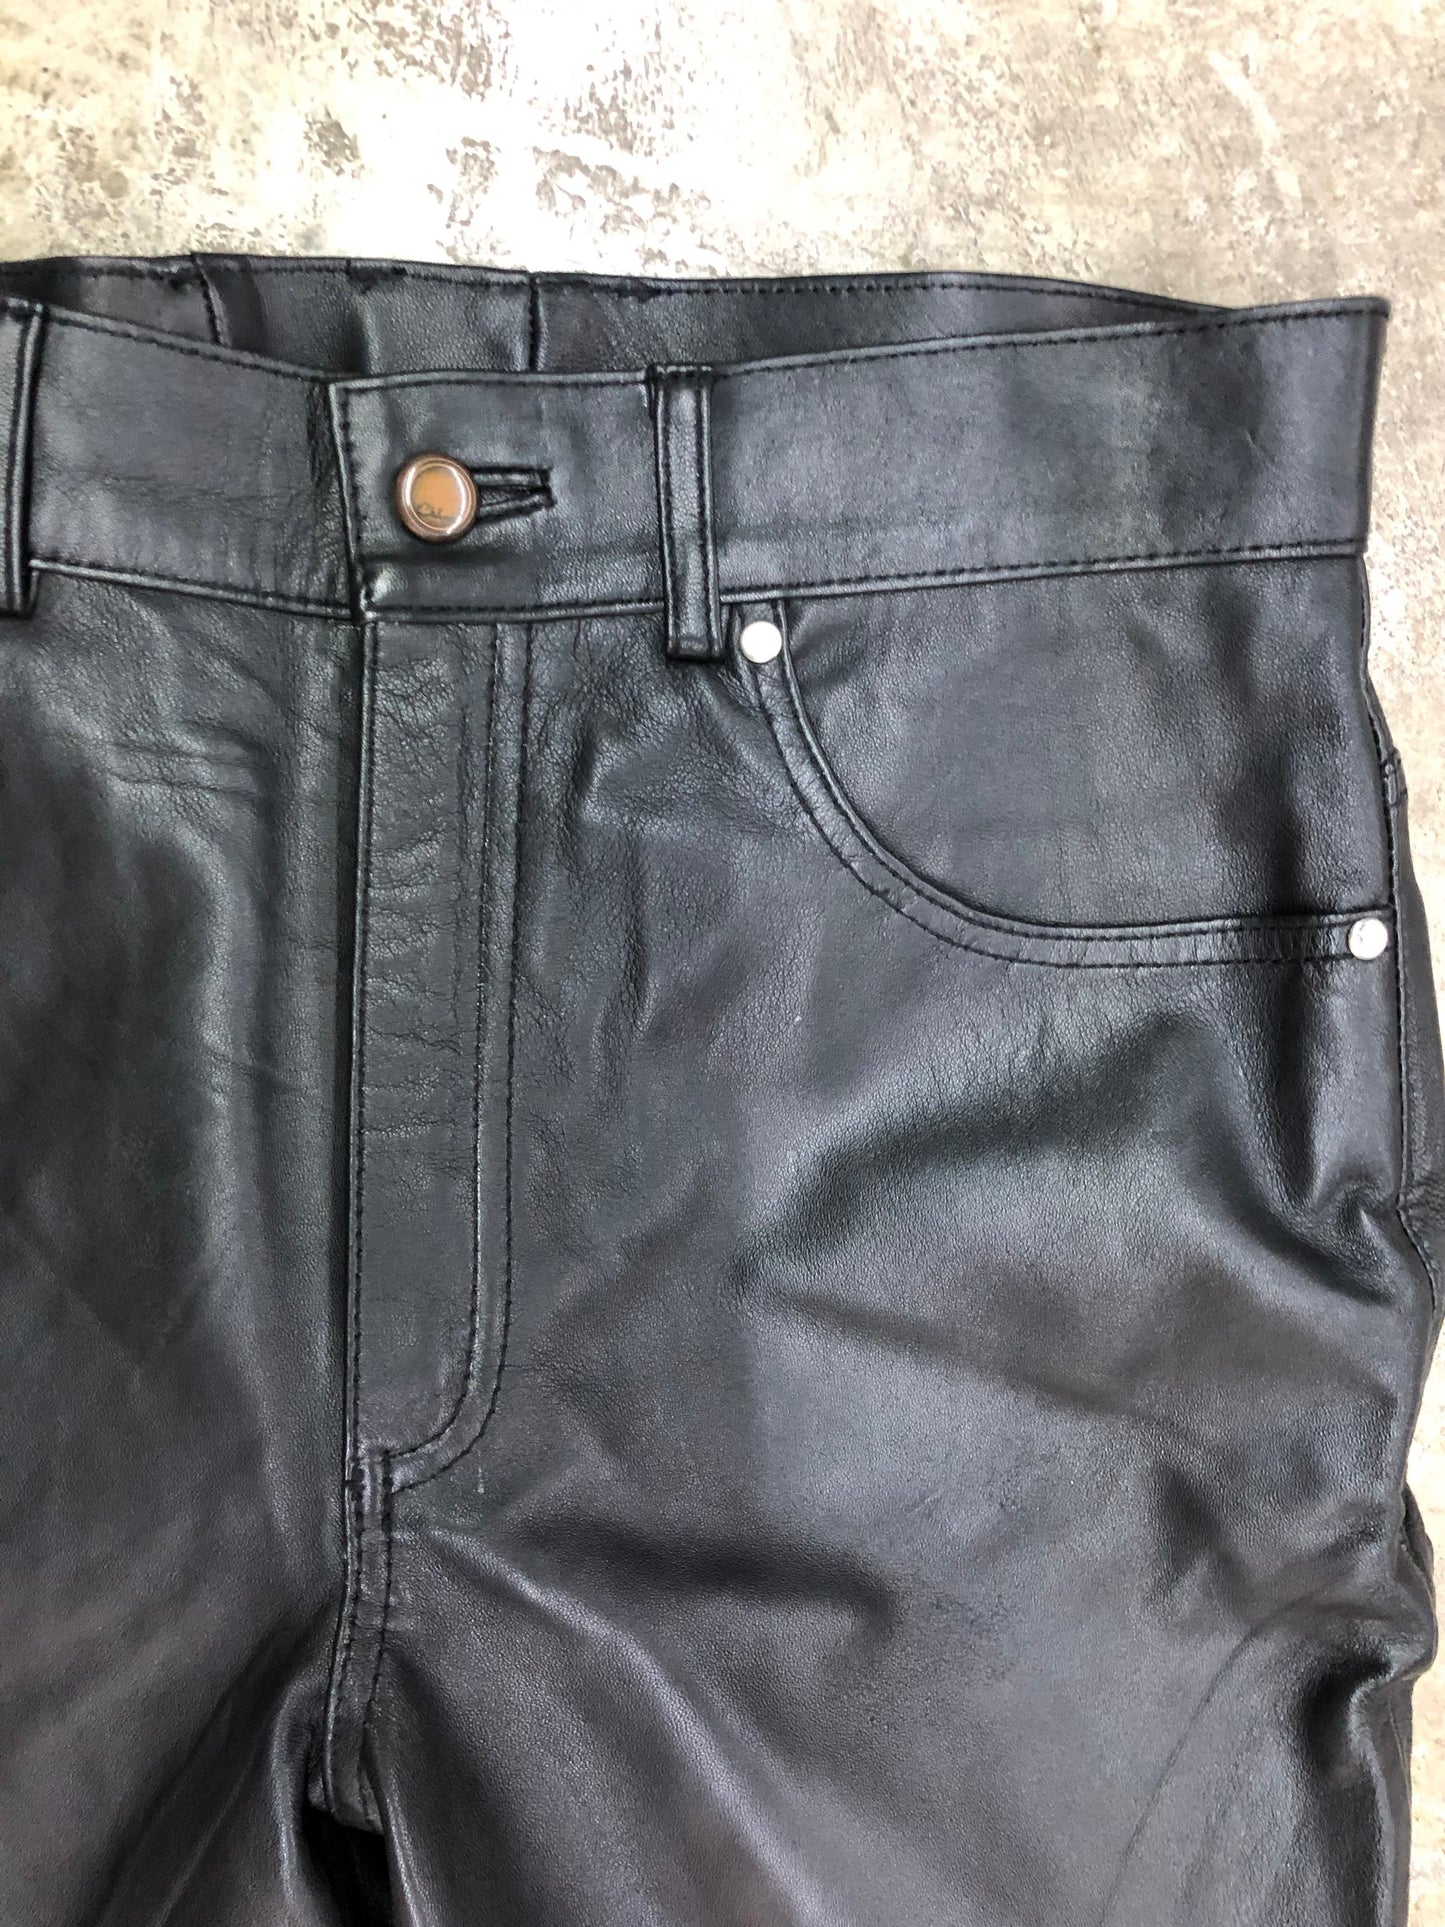 Black Leather Pants Sz 34x26